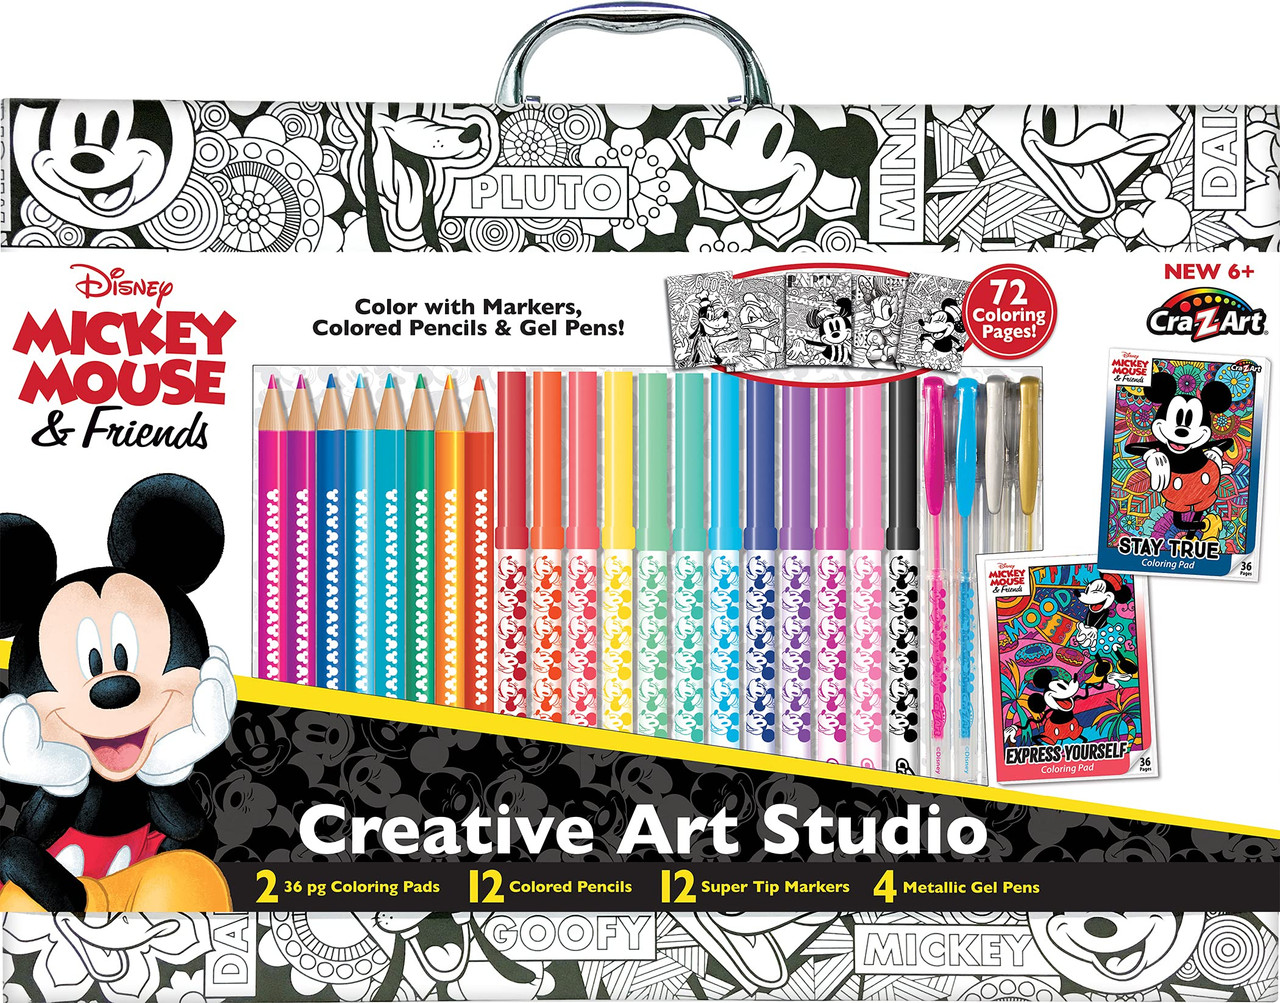 Crayola Mickey Mouse Inspiration Art Case - Shop leschampions